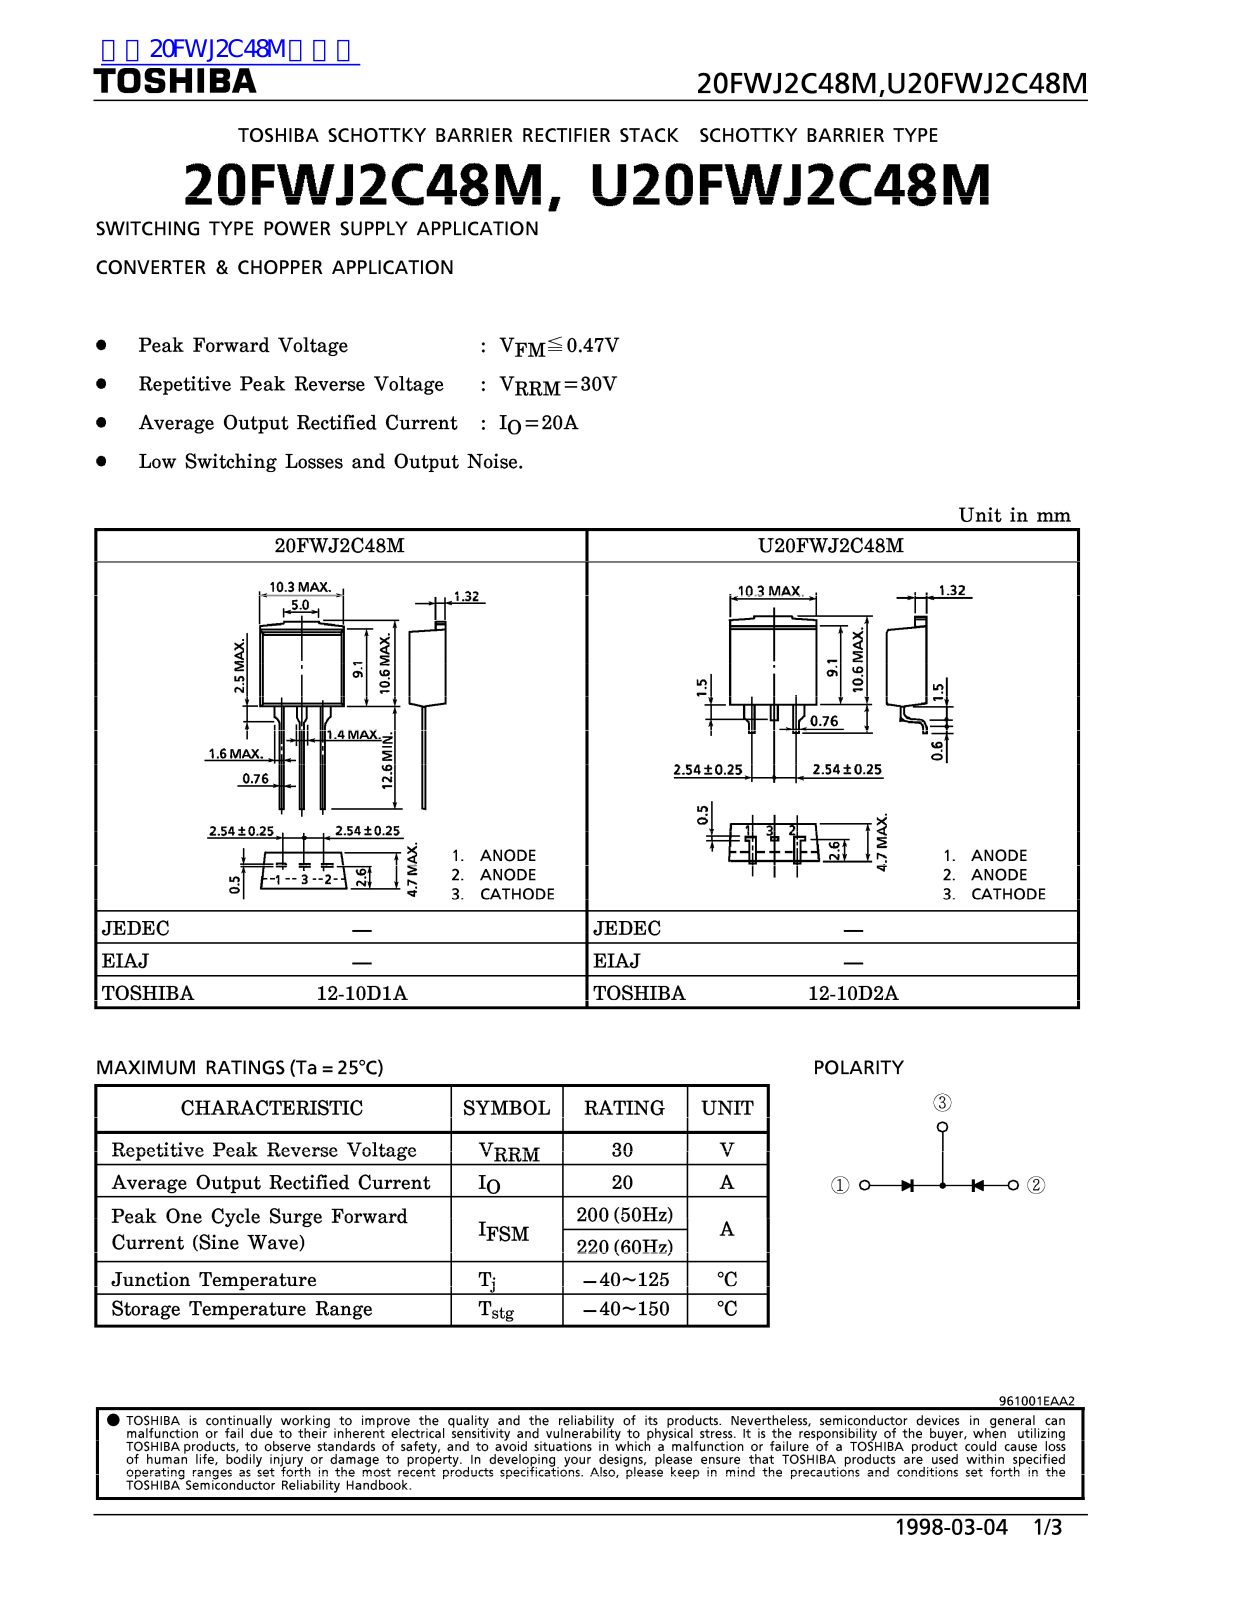 TOSHIBA 20FWJ2C48M, U20FWJ2C48M Technical data